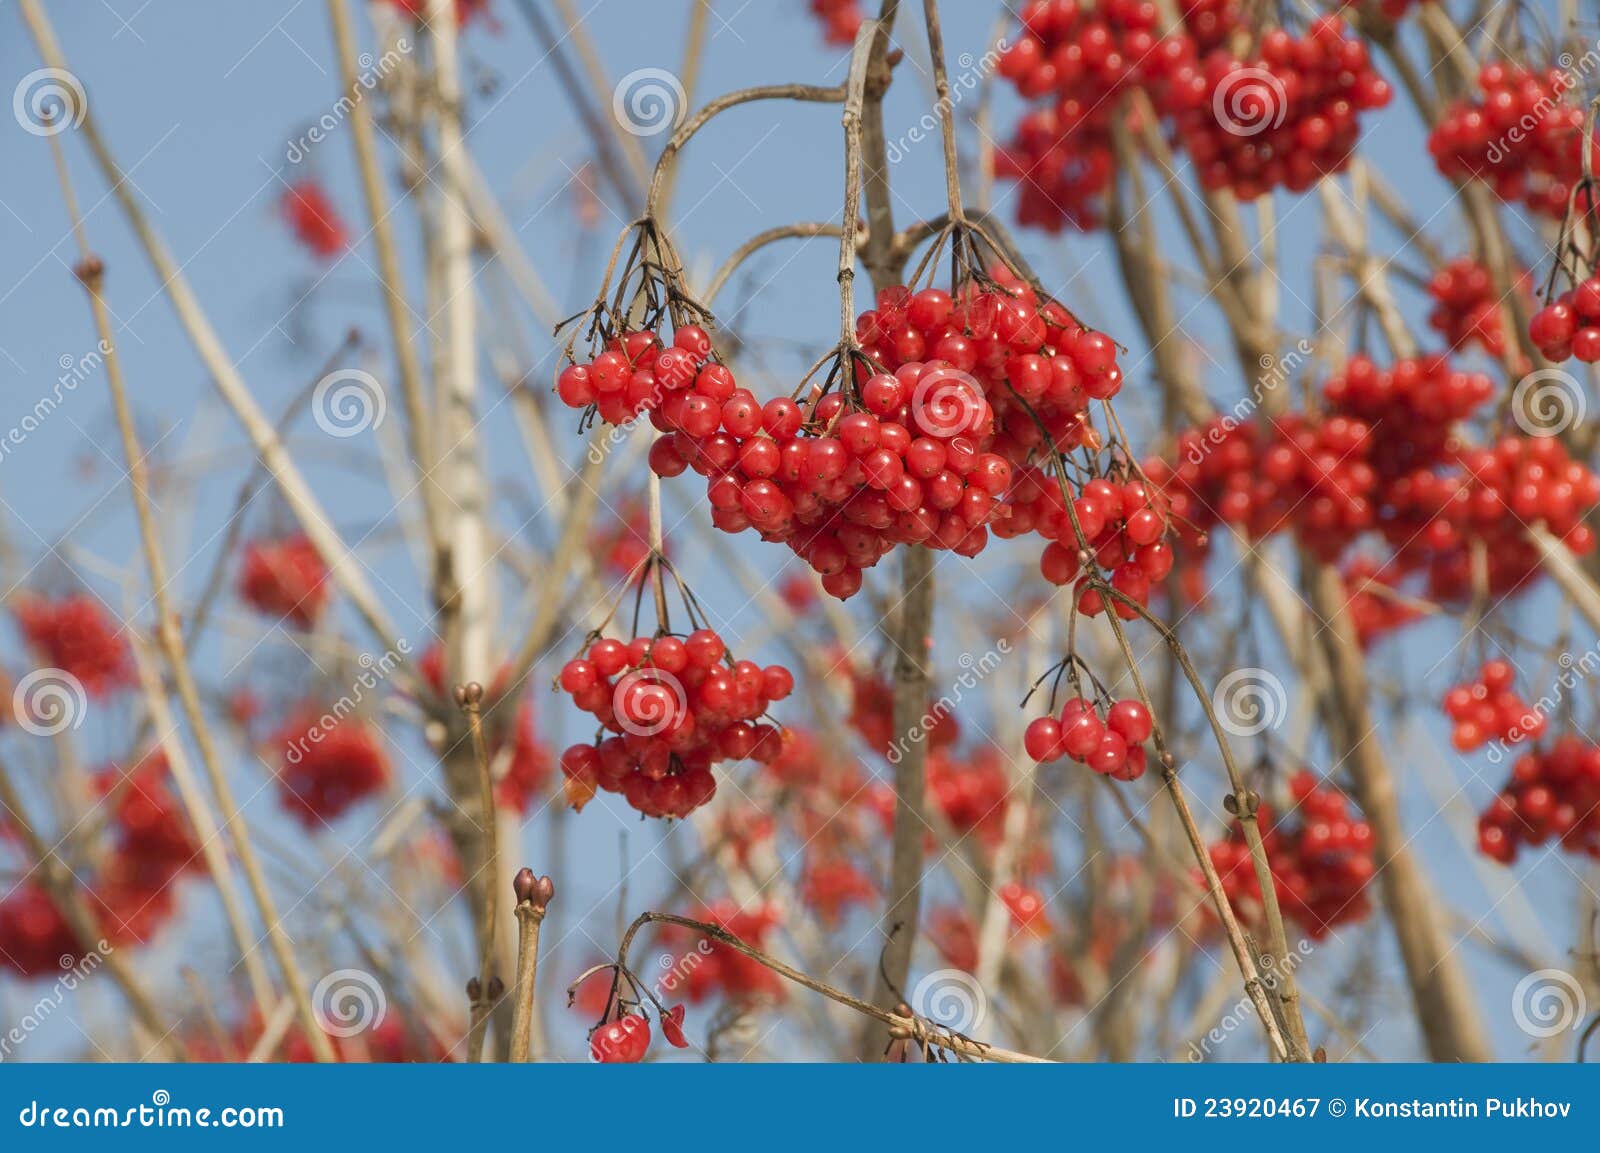 Red berries stock image. Image of flower, fruit, dogwood - 23920467